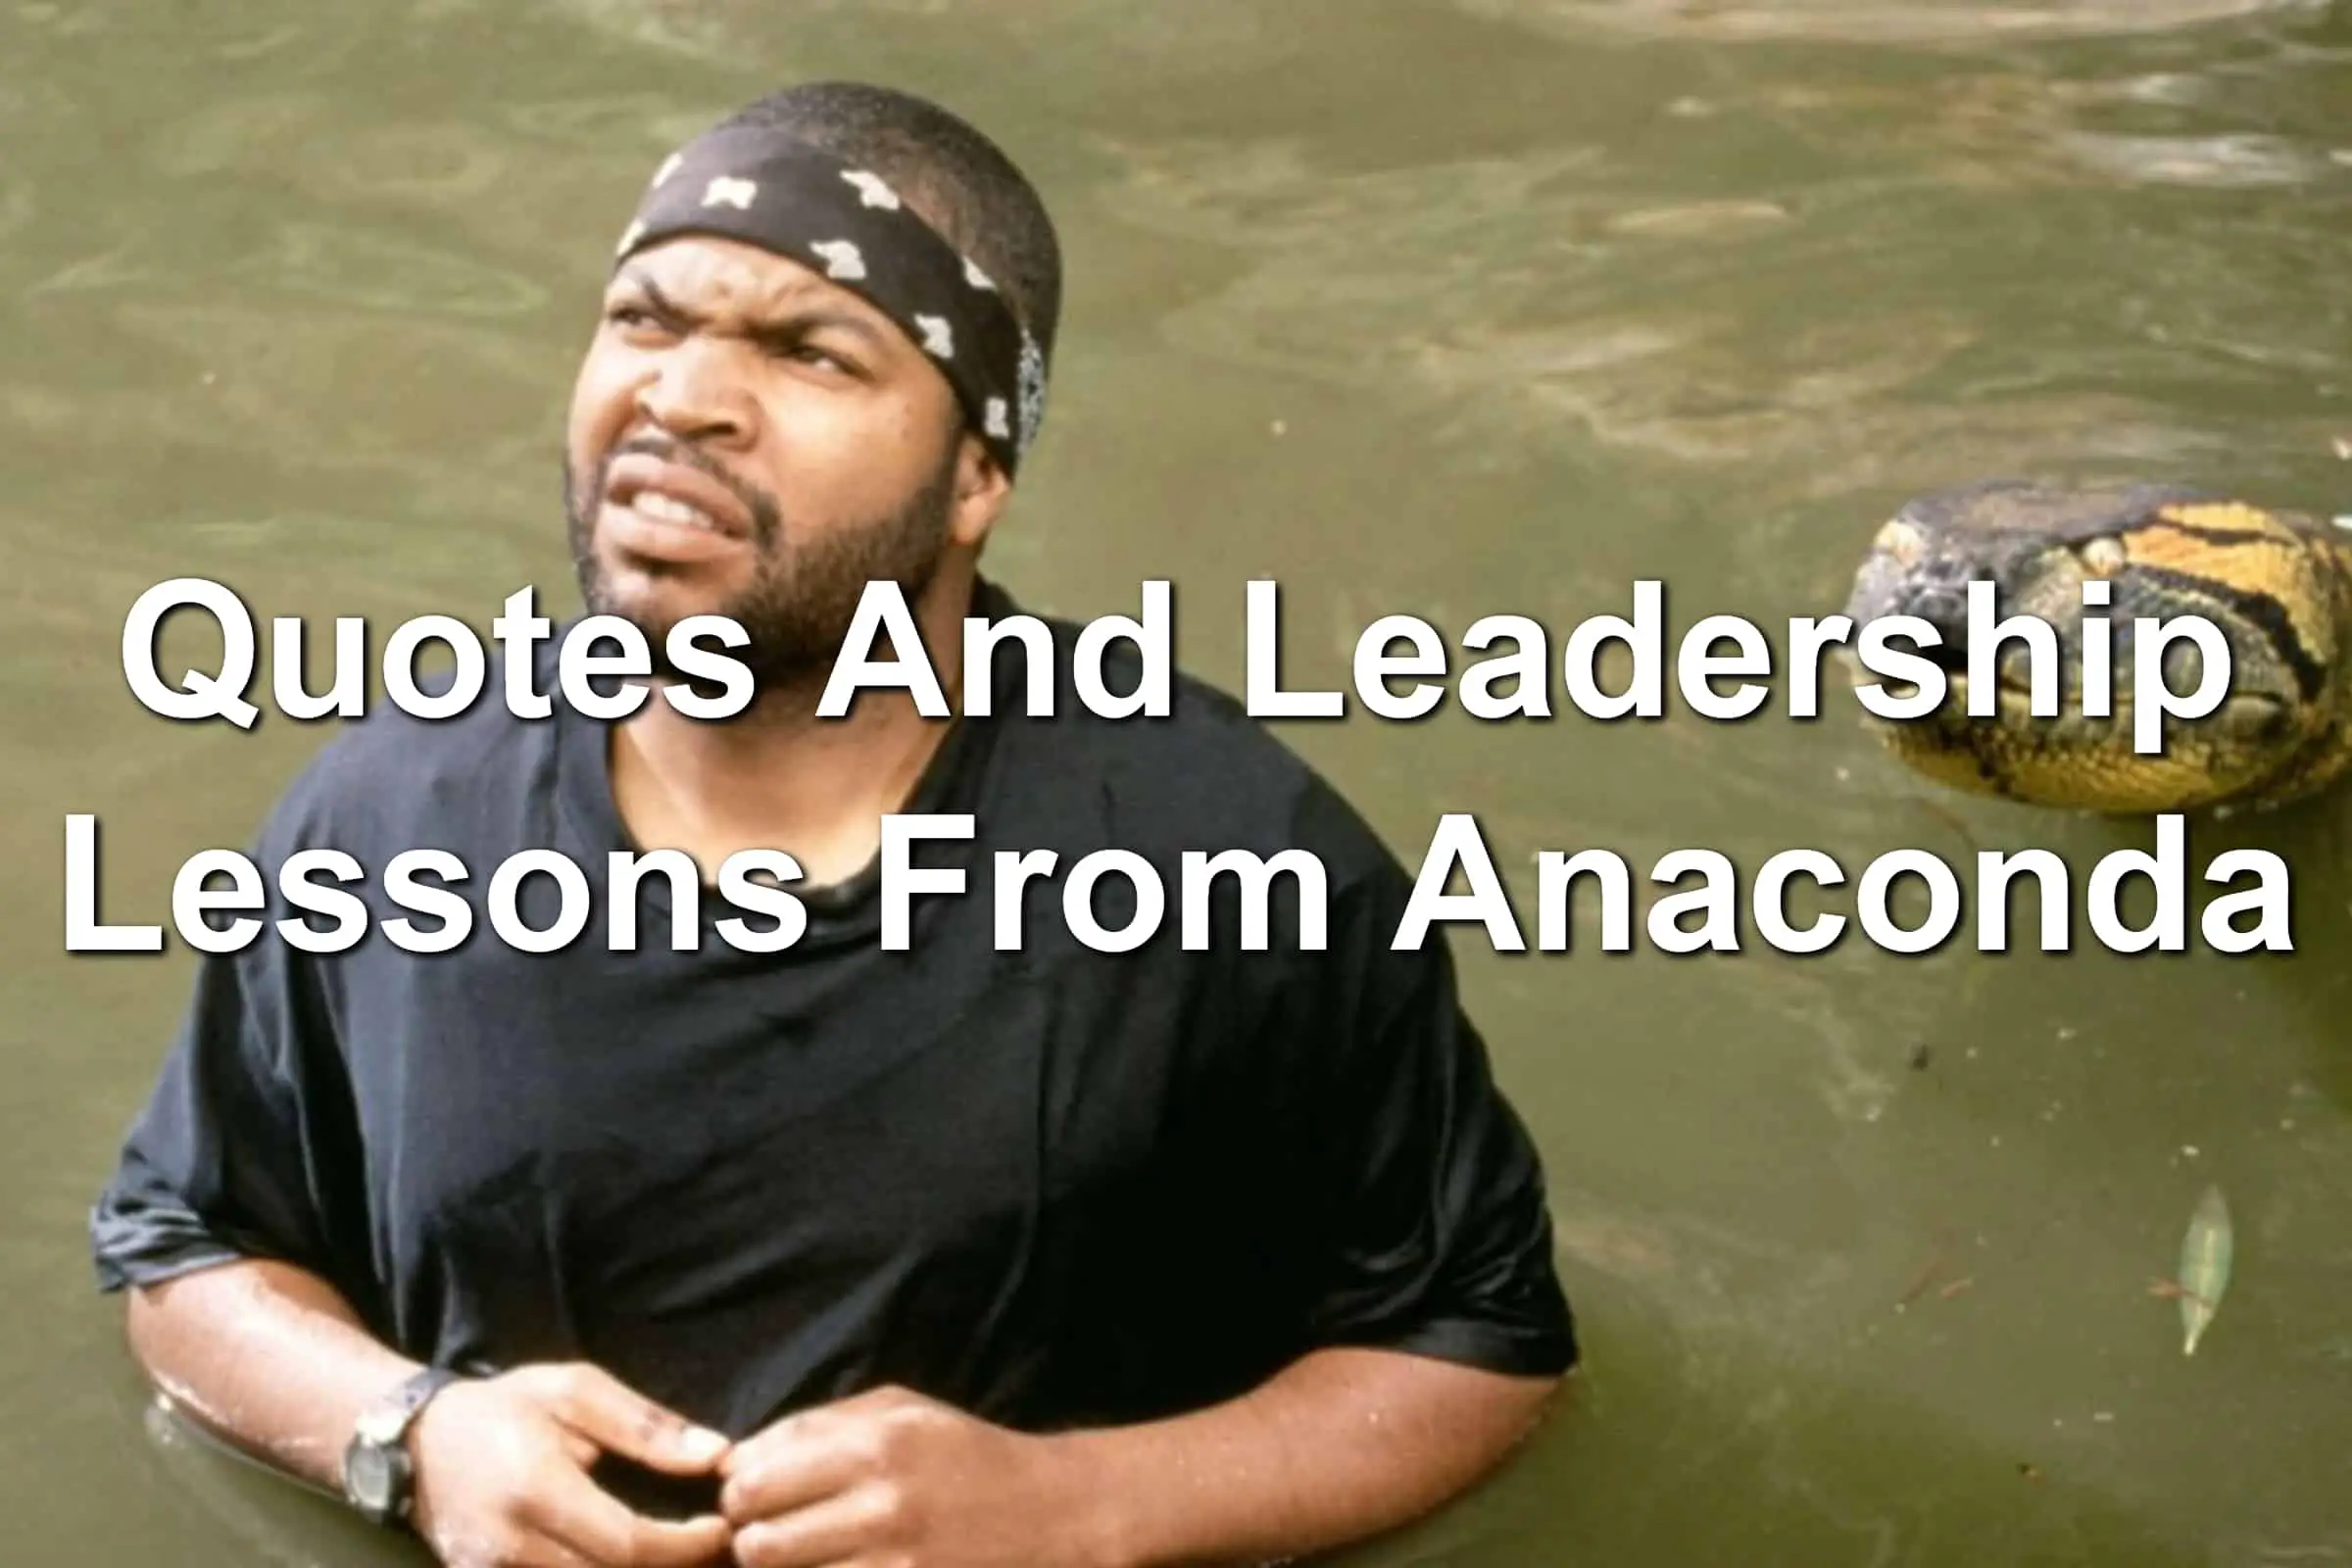 Ice Cube in the movie Anaconda